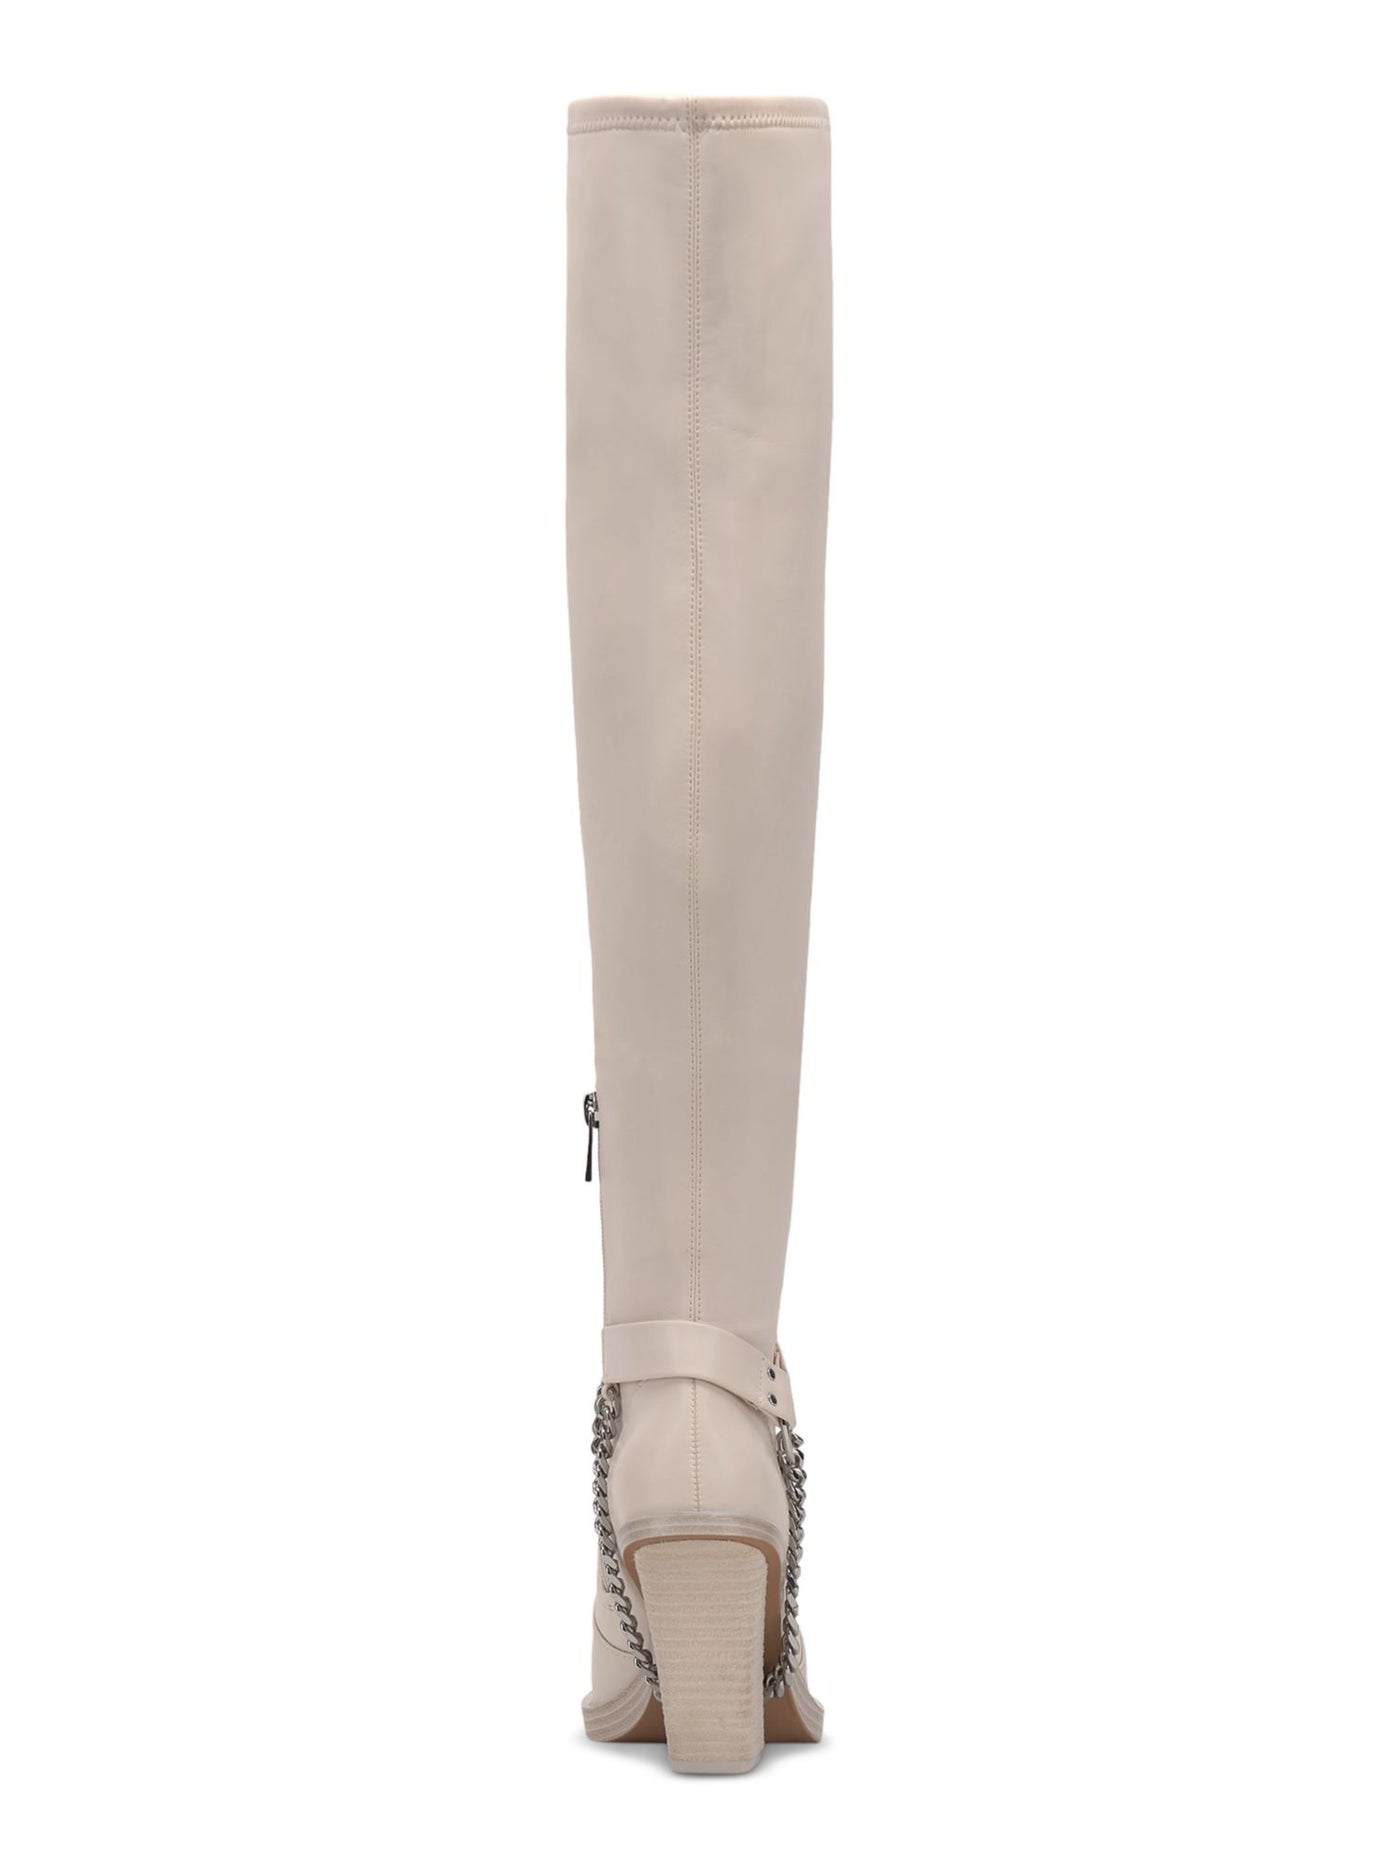 JESSICA SIMPSON Womens Ivory Comfort Langer Pointed Toe Block Heel Dress Boots 6.5 M